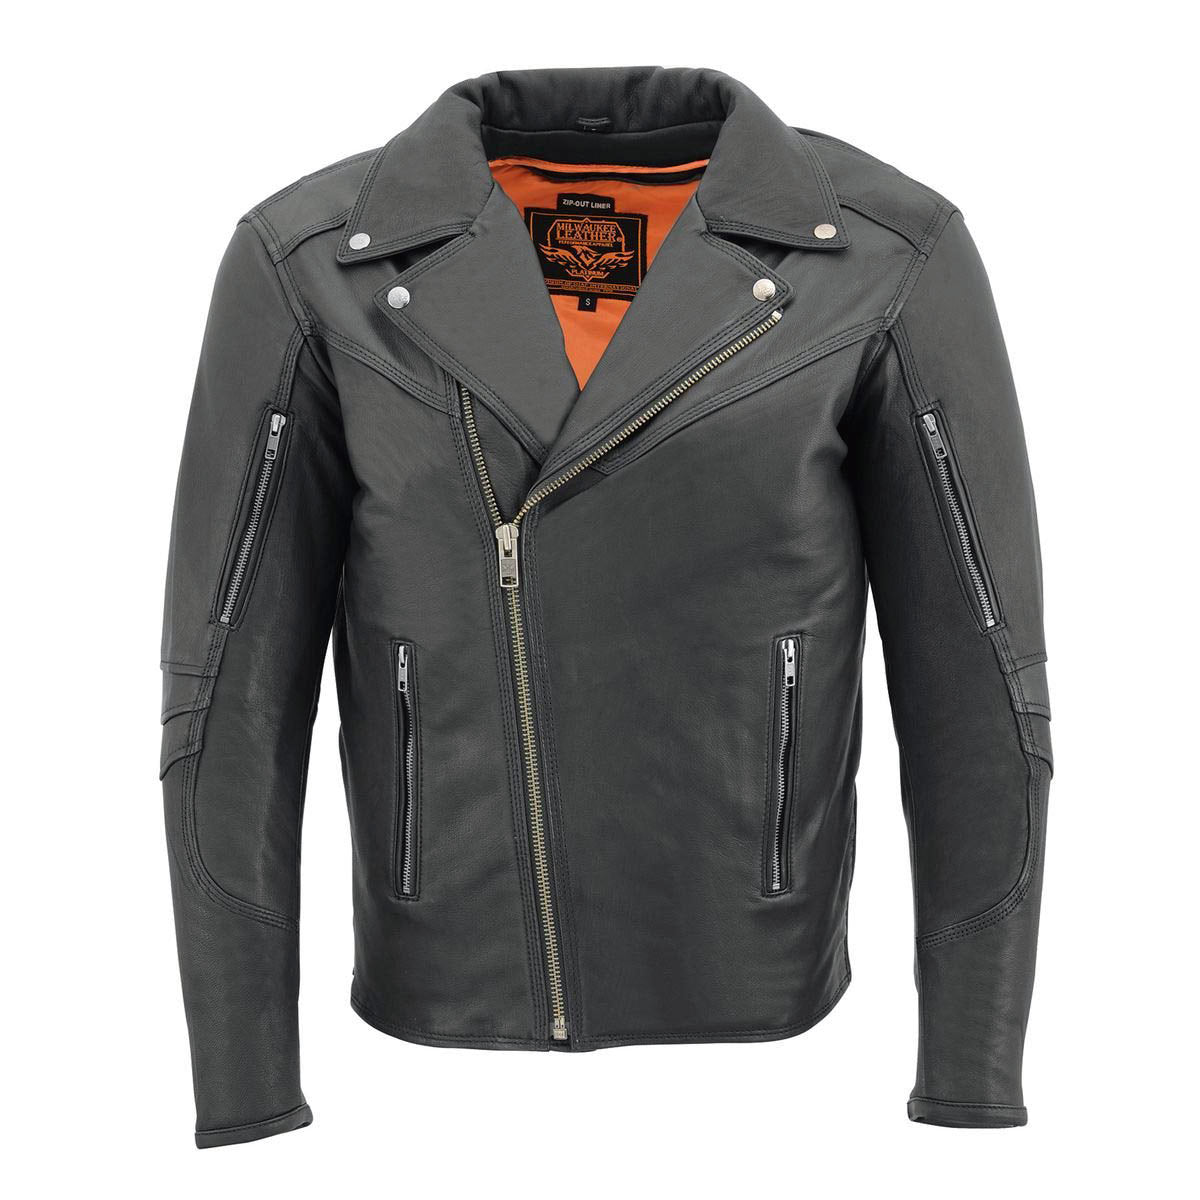 Milwaukee Leather MLM1516 Black Real Leather Motorcycle Jacket for Men – James Brando Style Biker Jacket